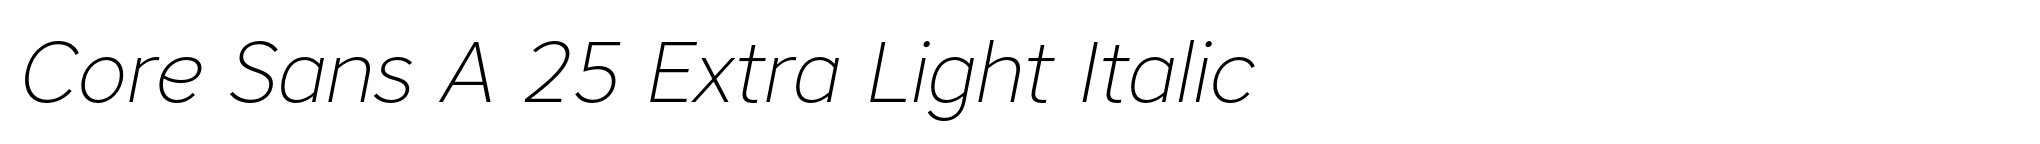 Core Sans A 25 Extra Light Italic image